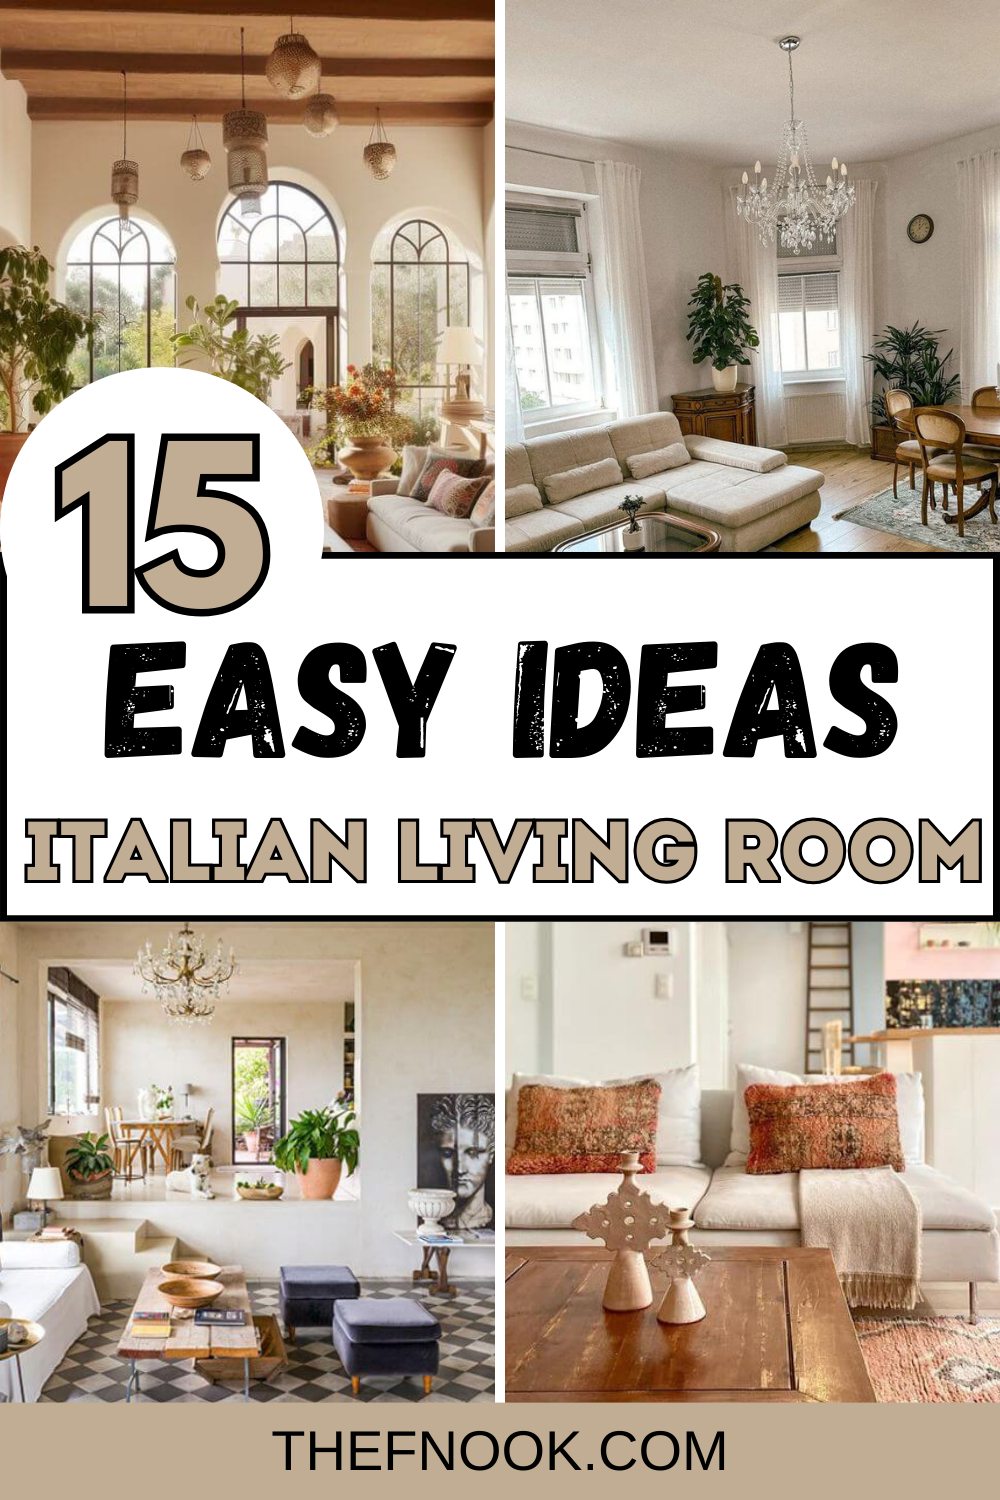 15 Easy and Inspiring Decor Ideas for an Italian Living Room